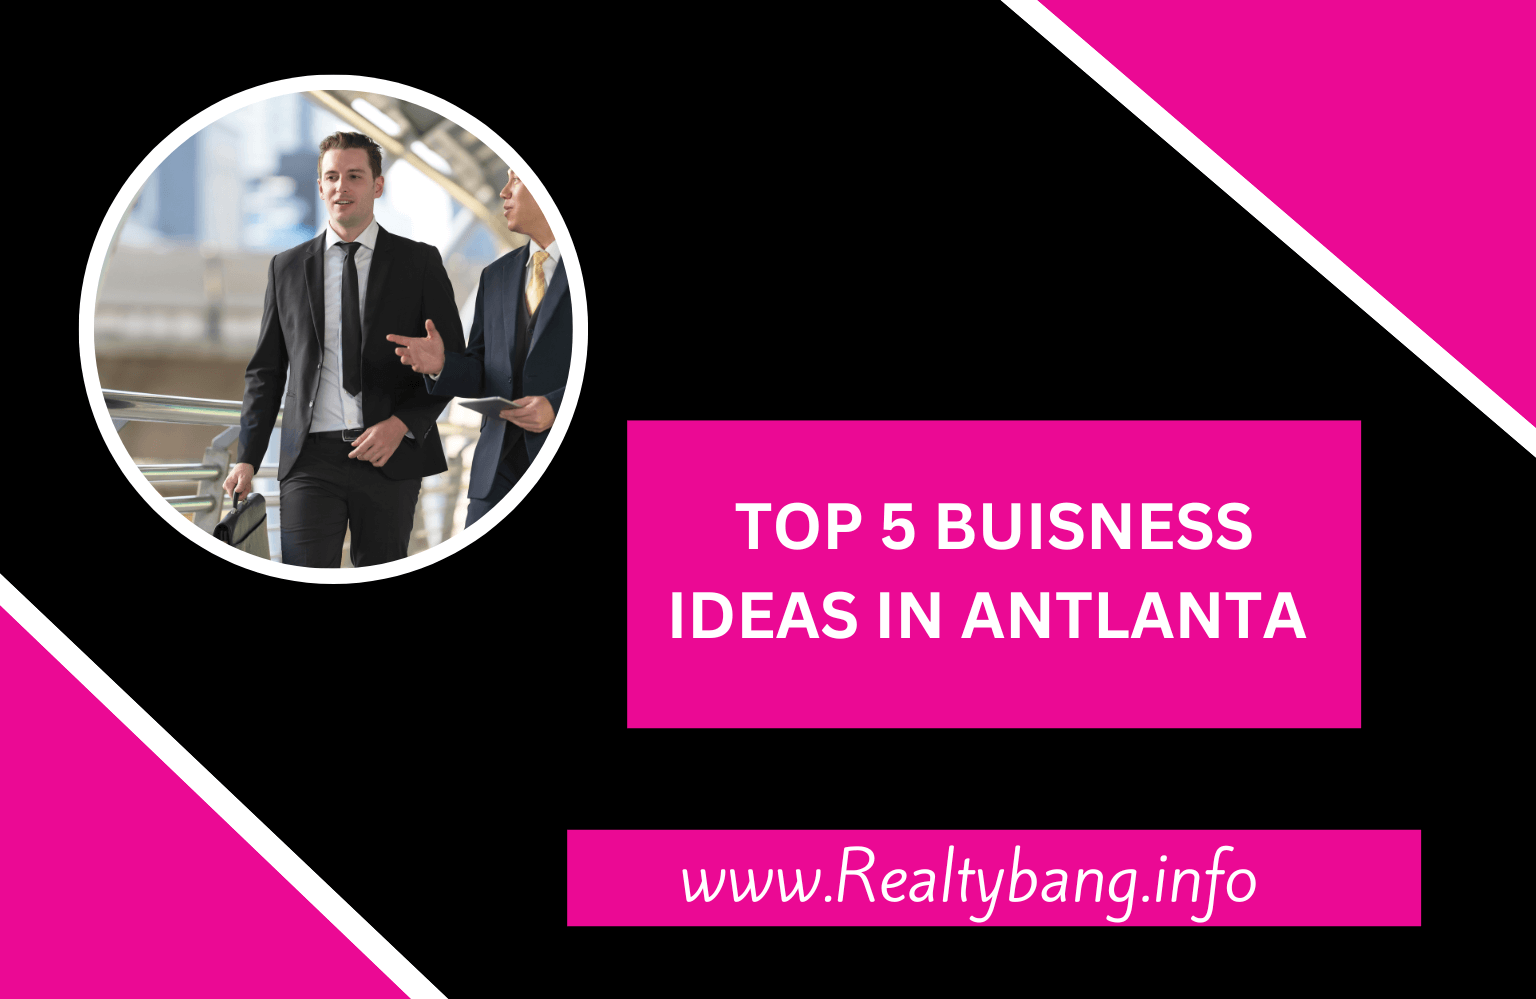 TOP 5 BUSINESS IDEAS IN ATLANTA